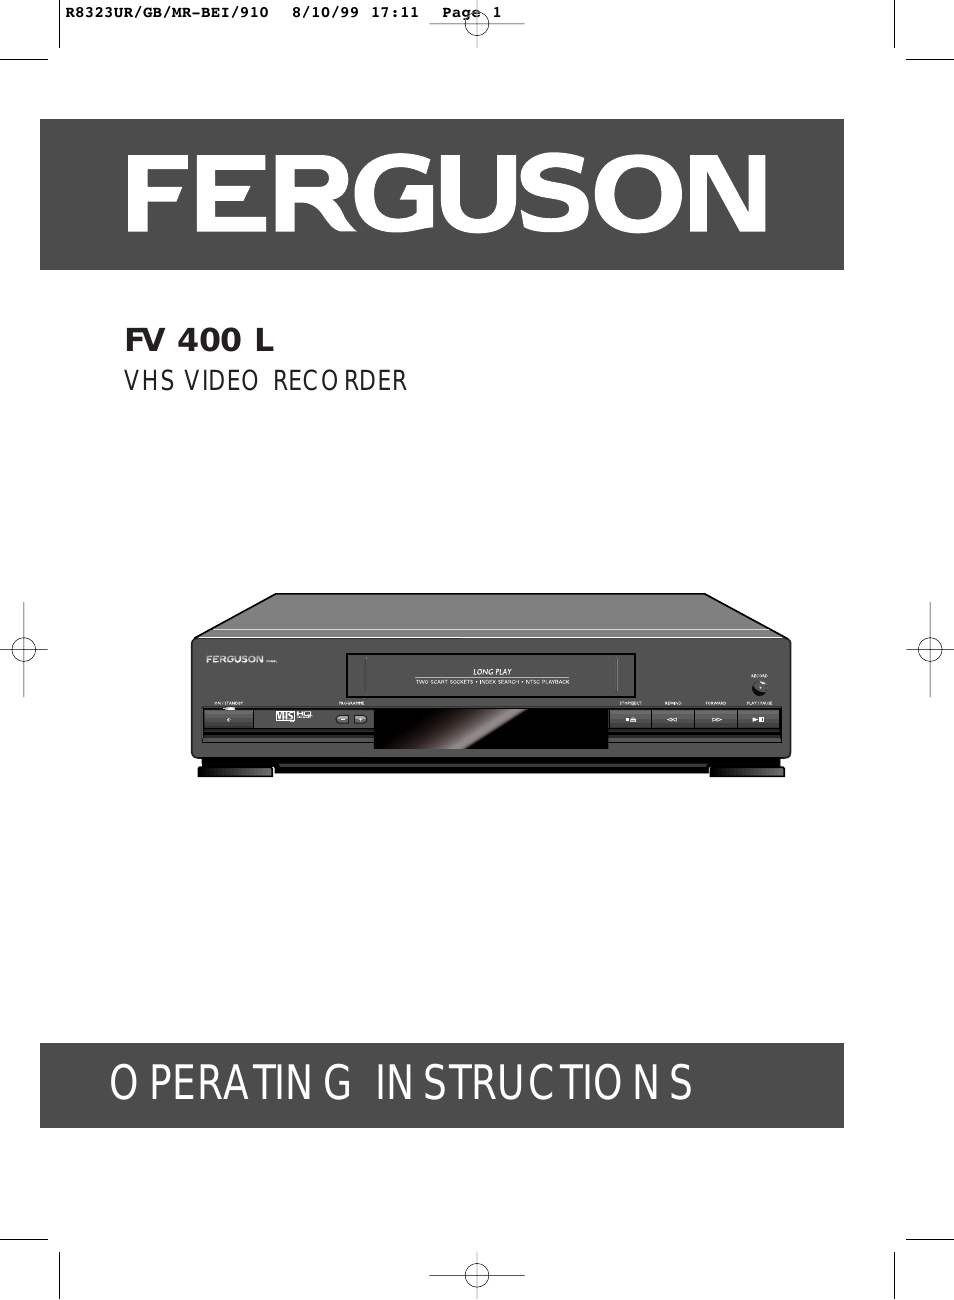 Ferguson FV 400 L